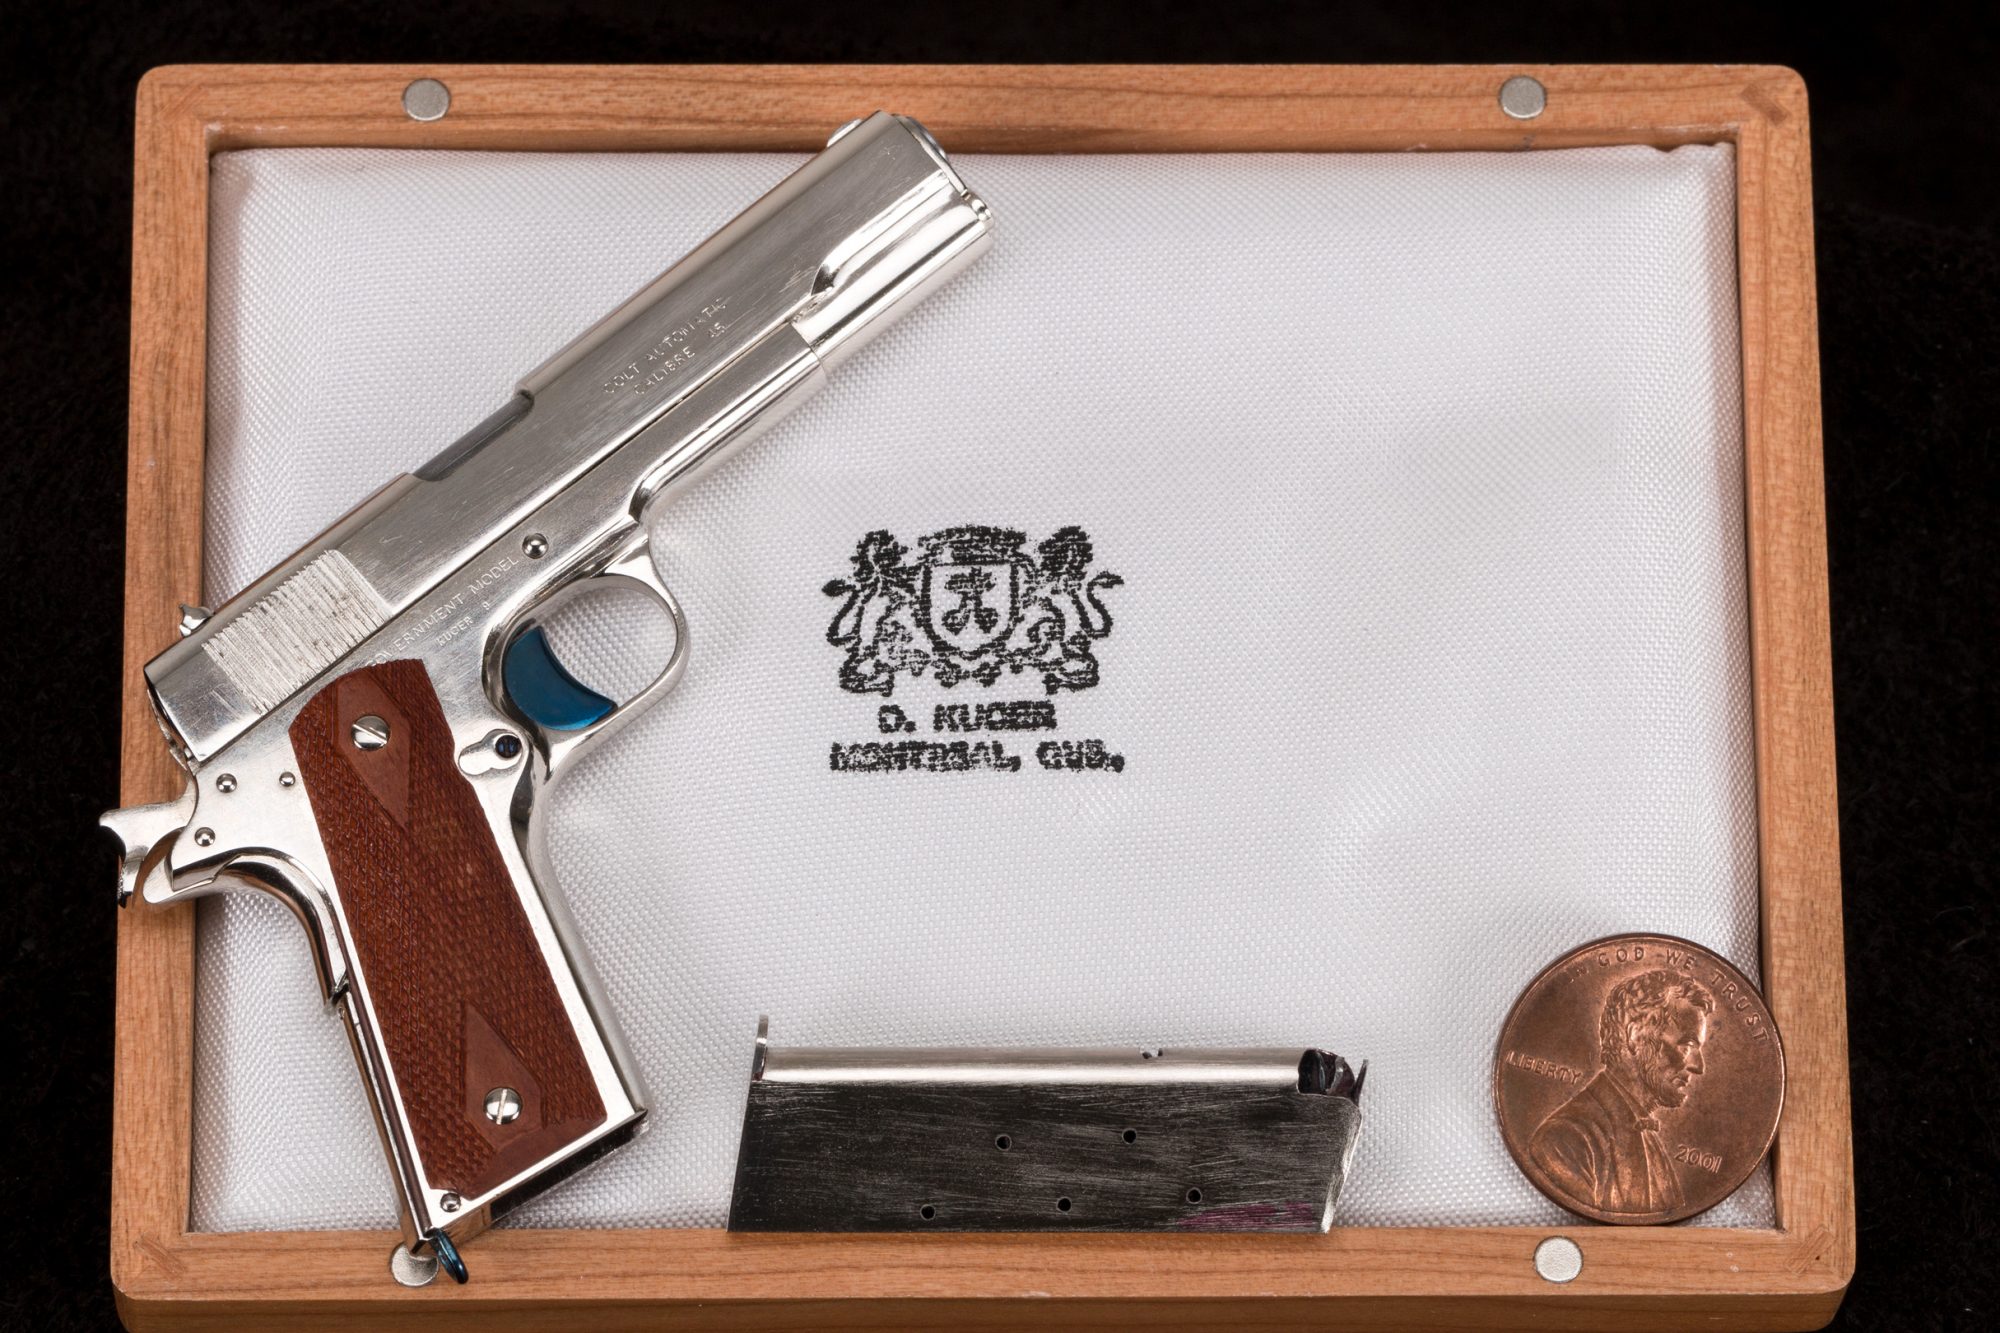 52C David Kucer Miniatures Colt 1911 9